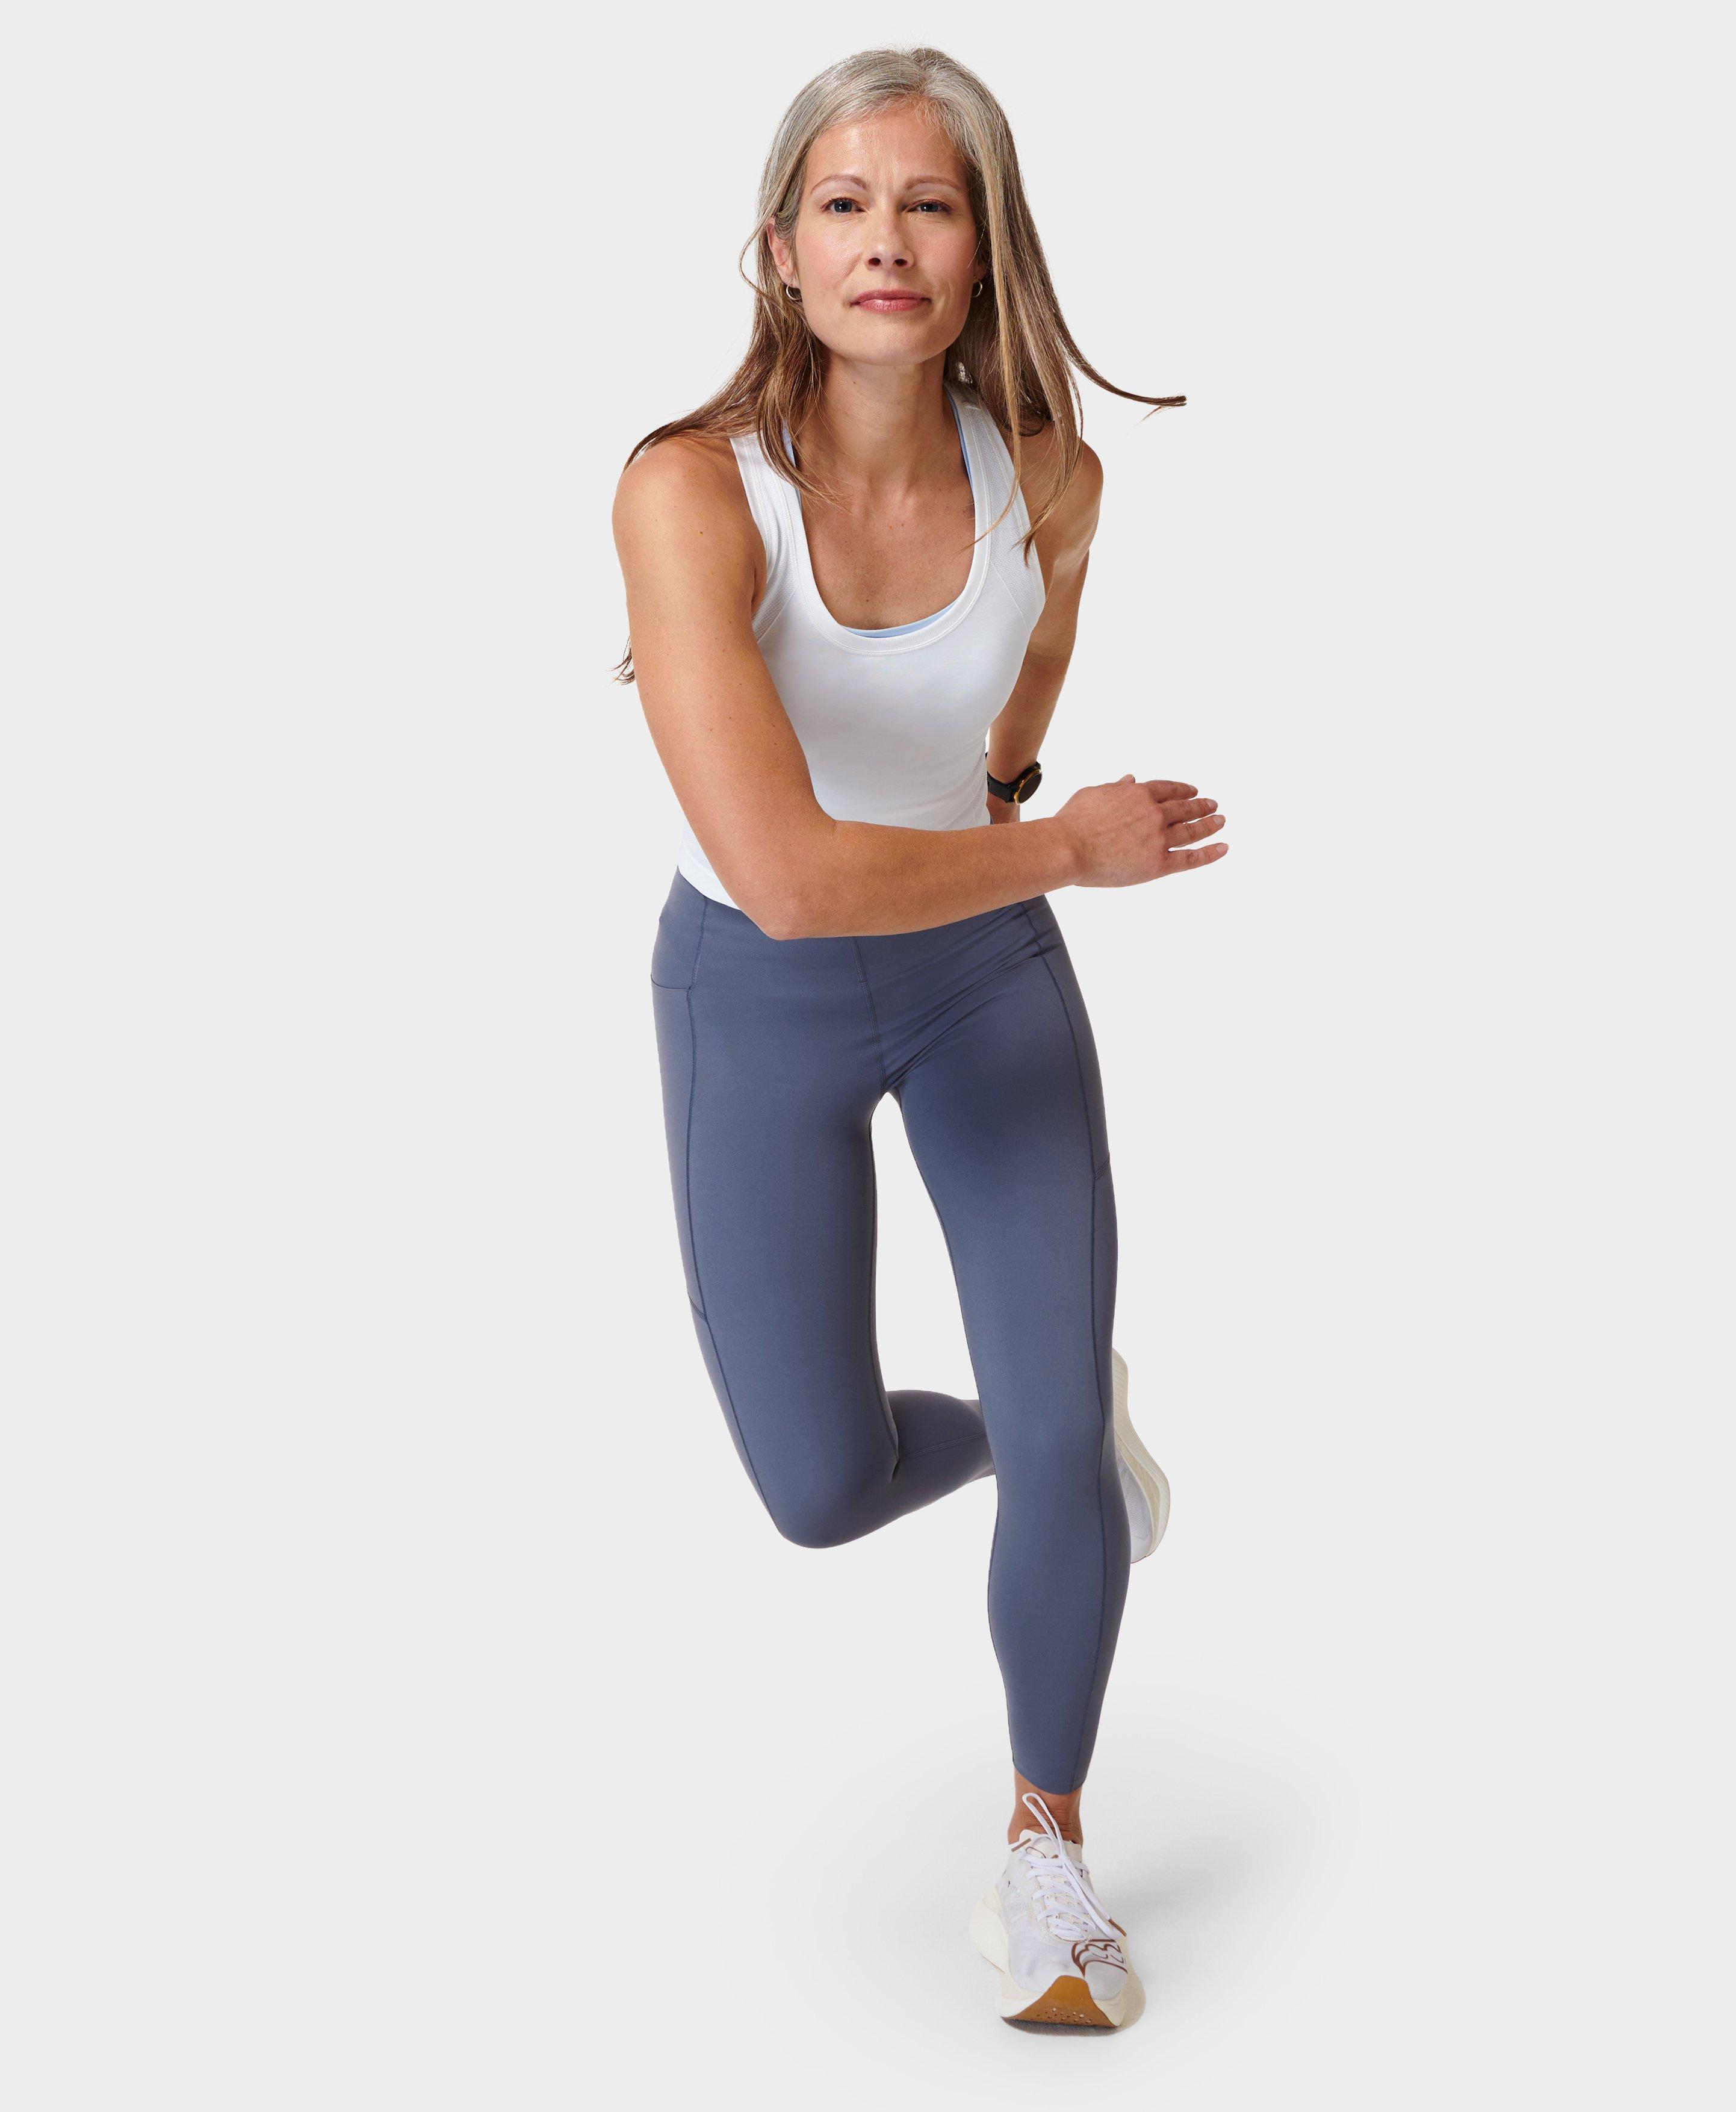 Galaxy Blue Squat Proof Women's Performance Leggings – be defiant.®